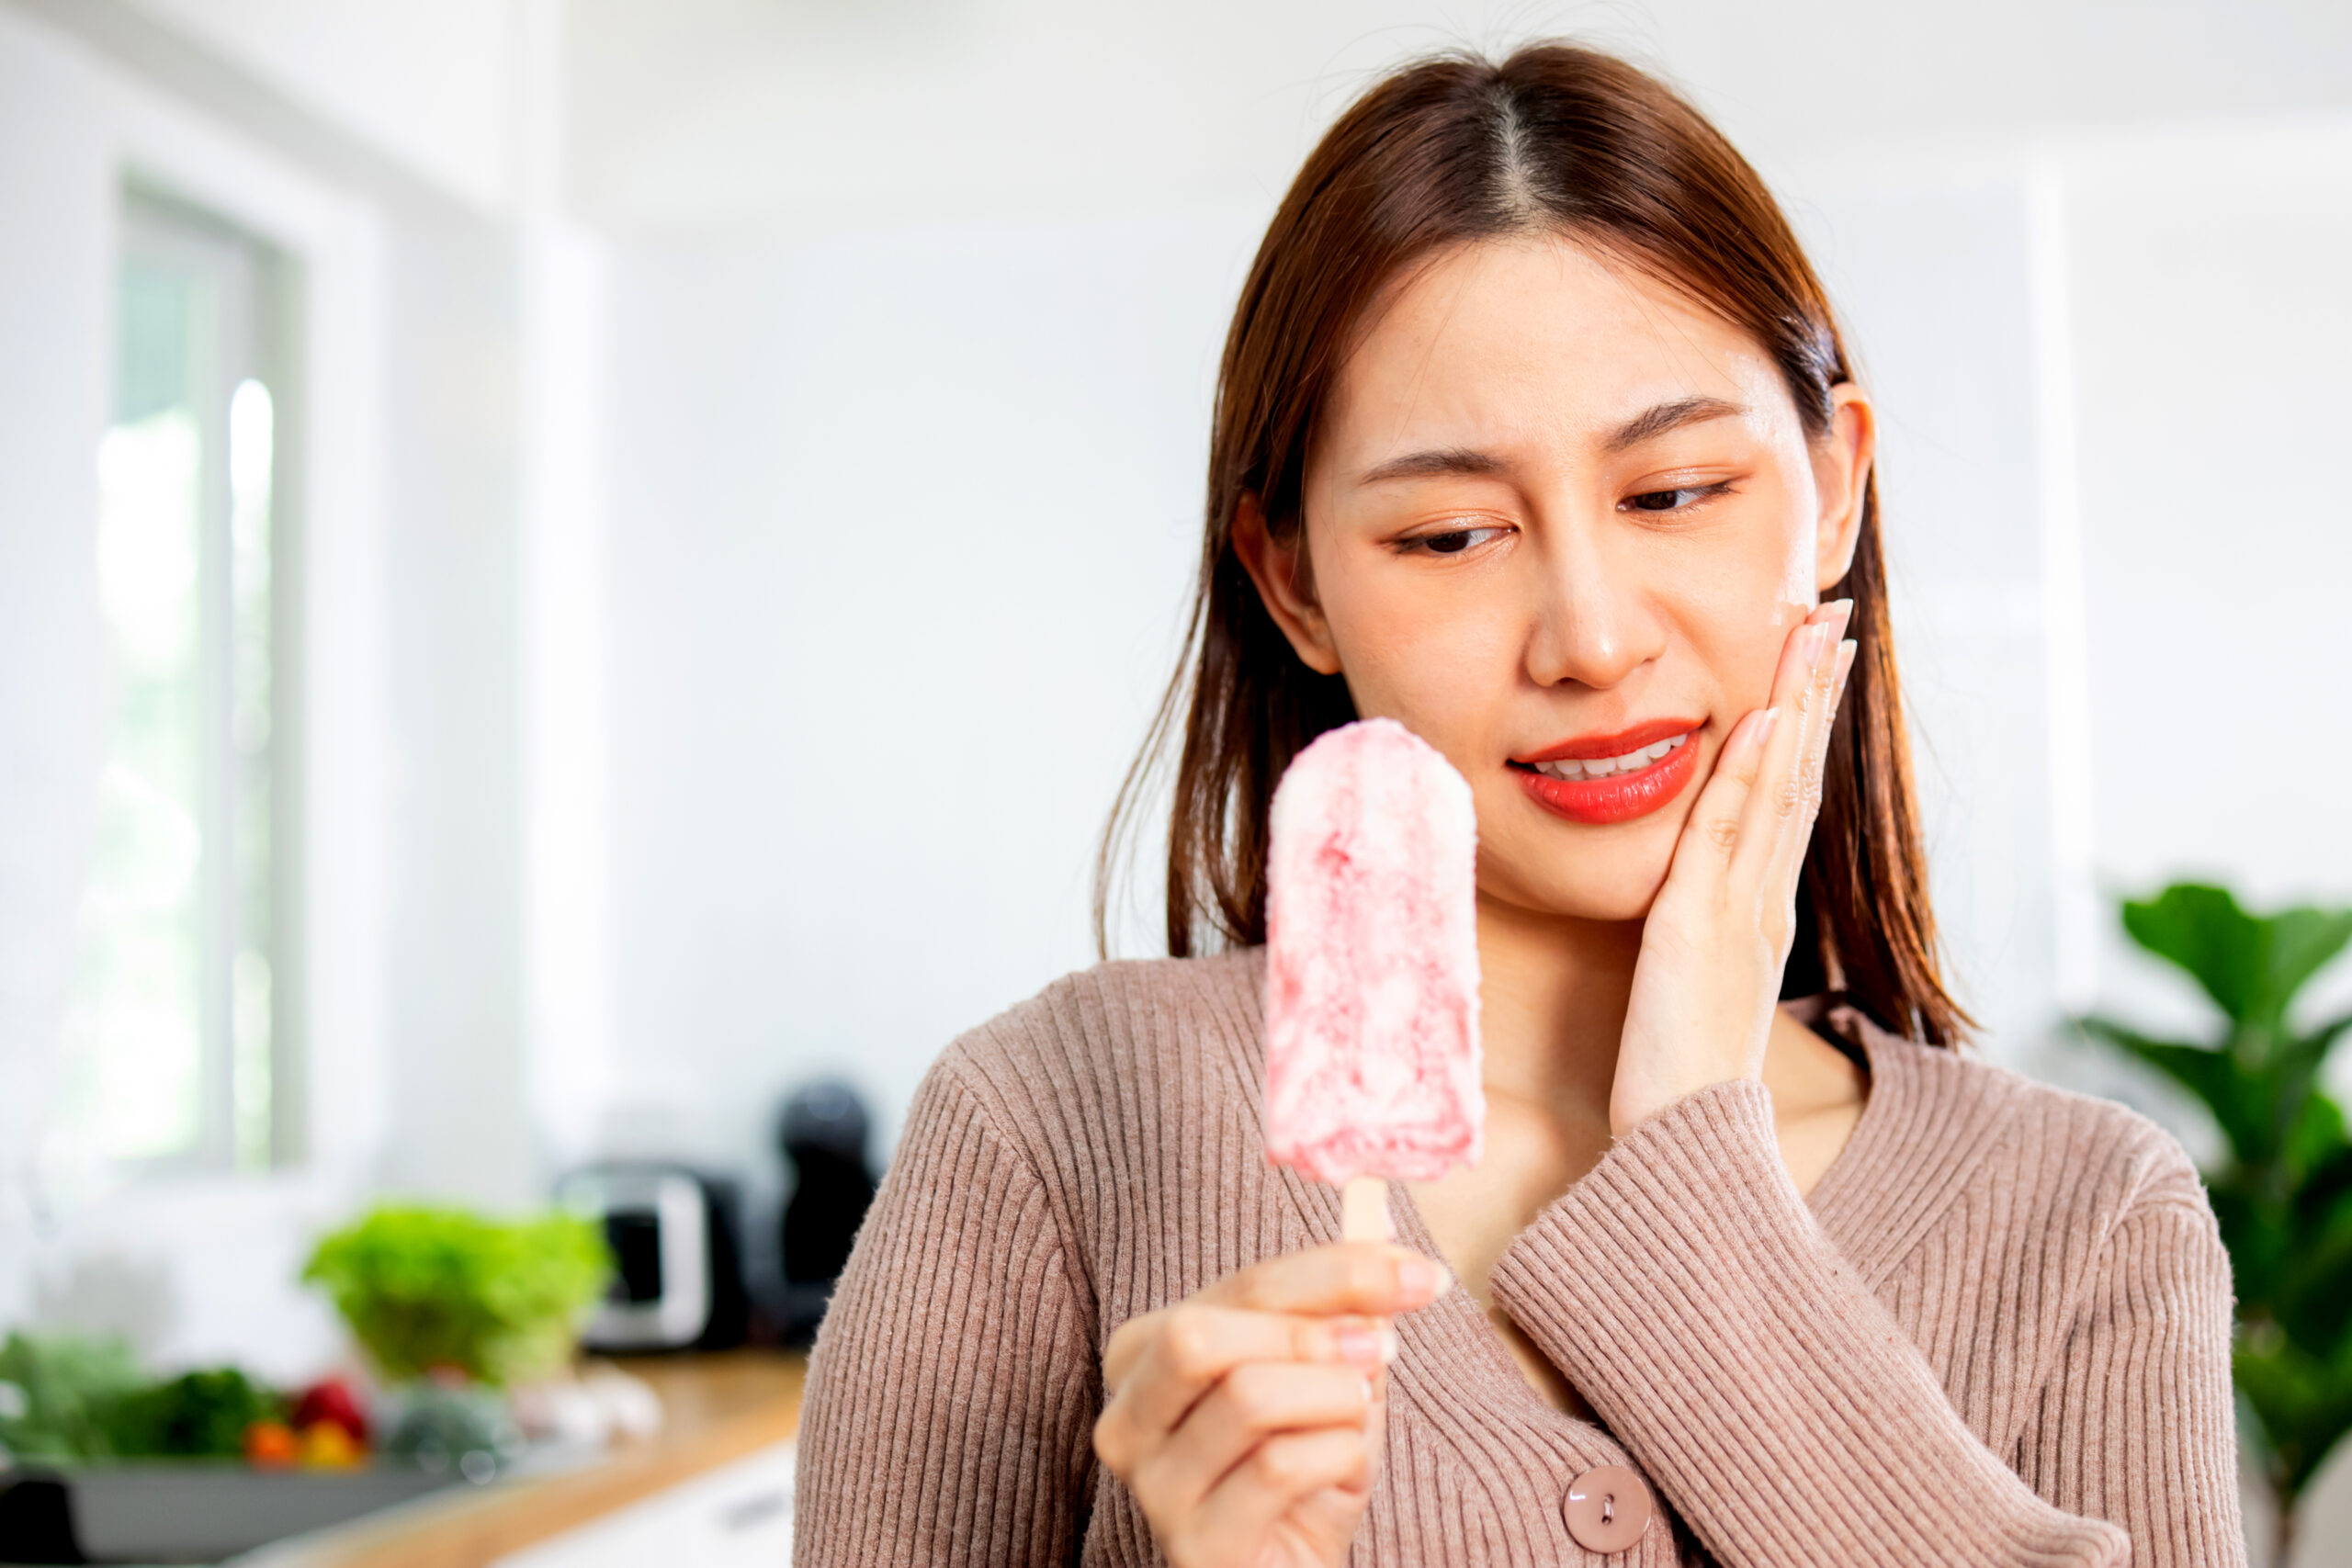 Asian woman has sensitive teeth while eating ice cream